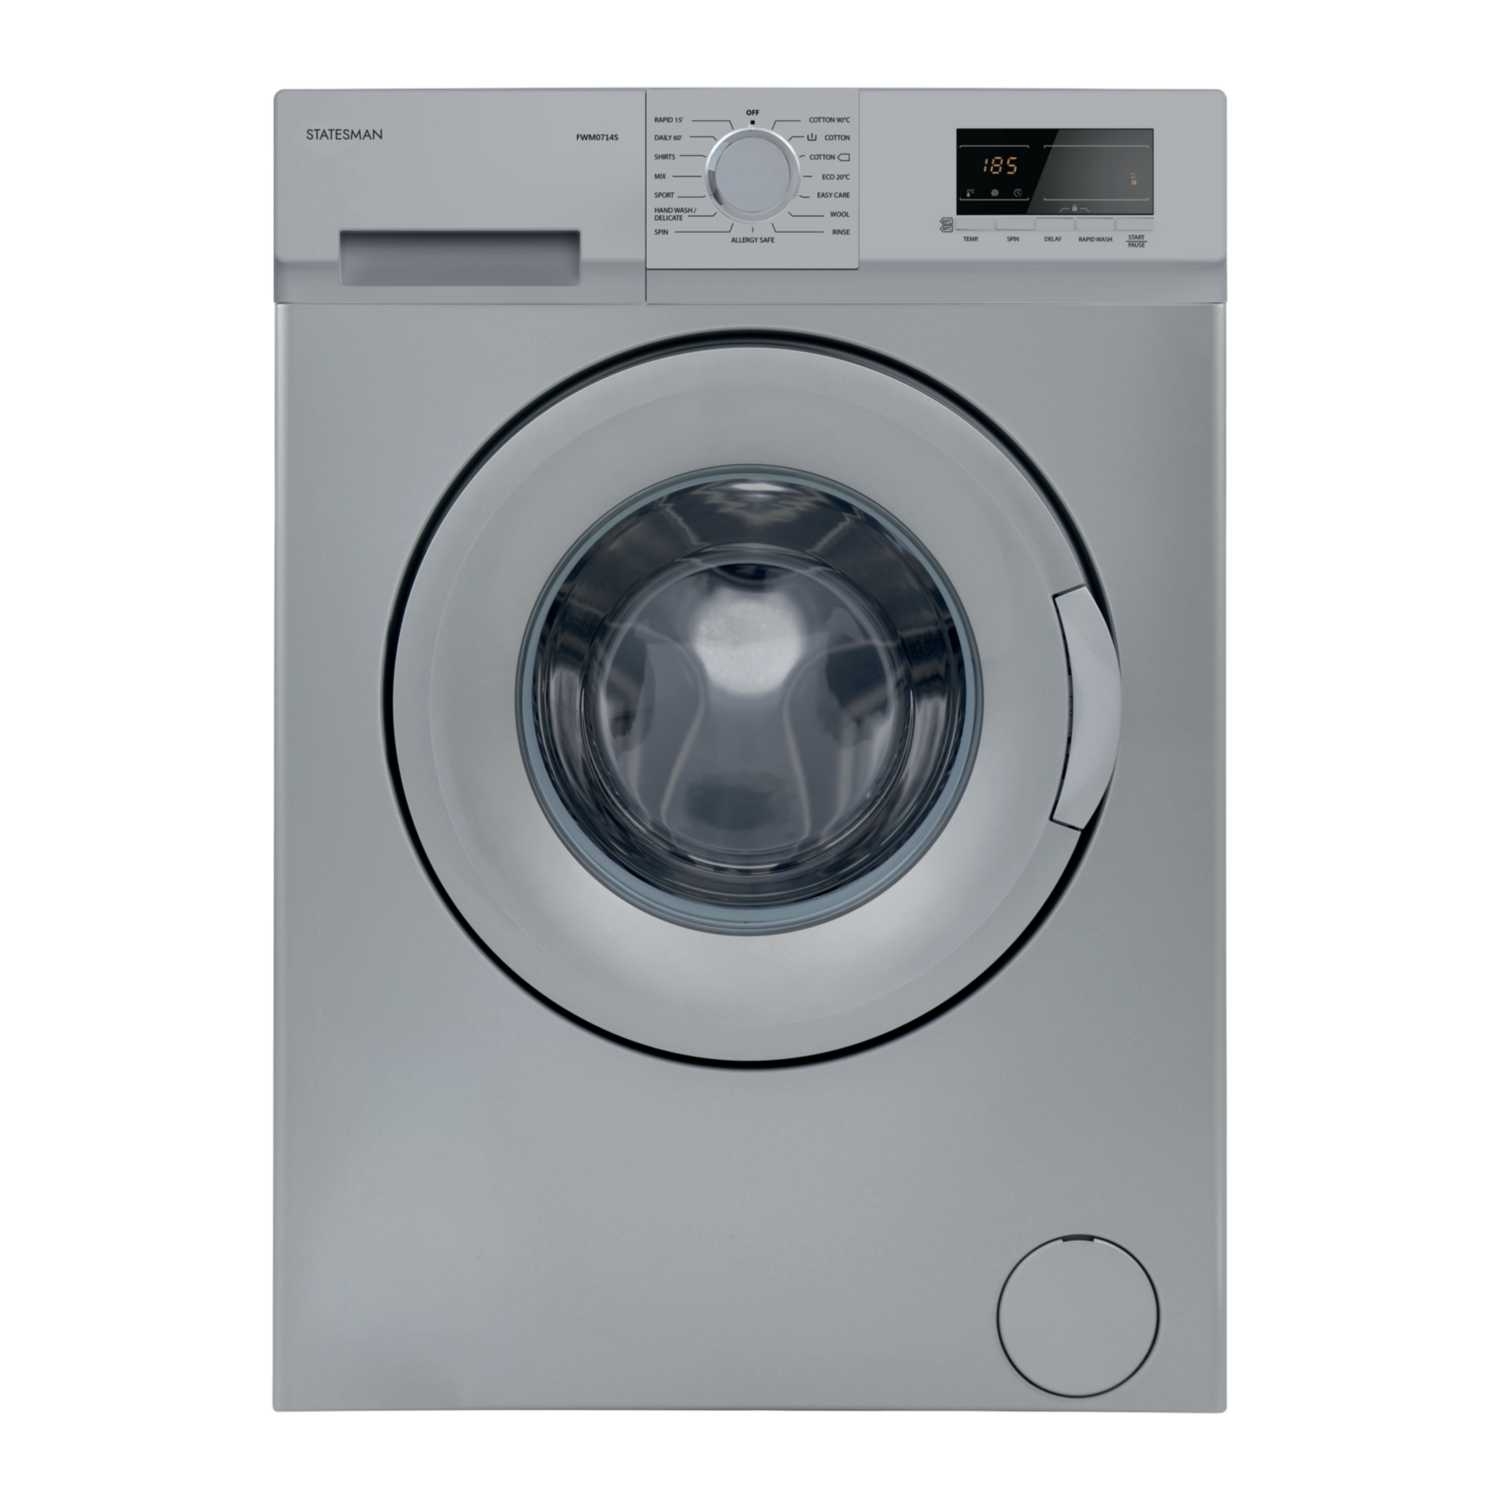 Statesman 7kg 1400rm Washing Machine Silver